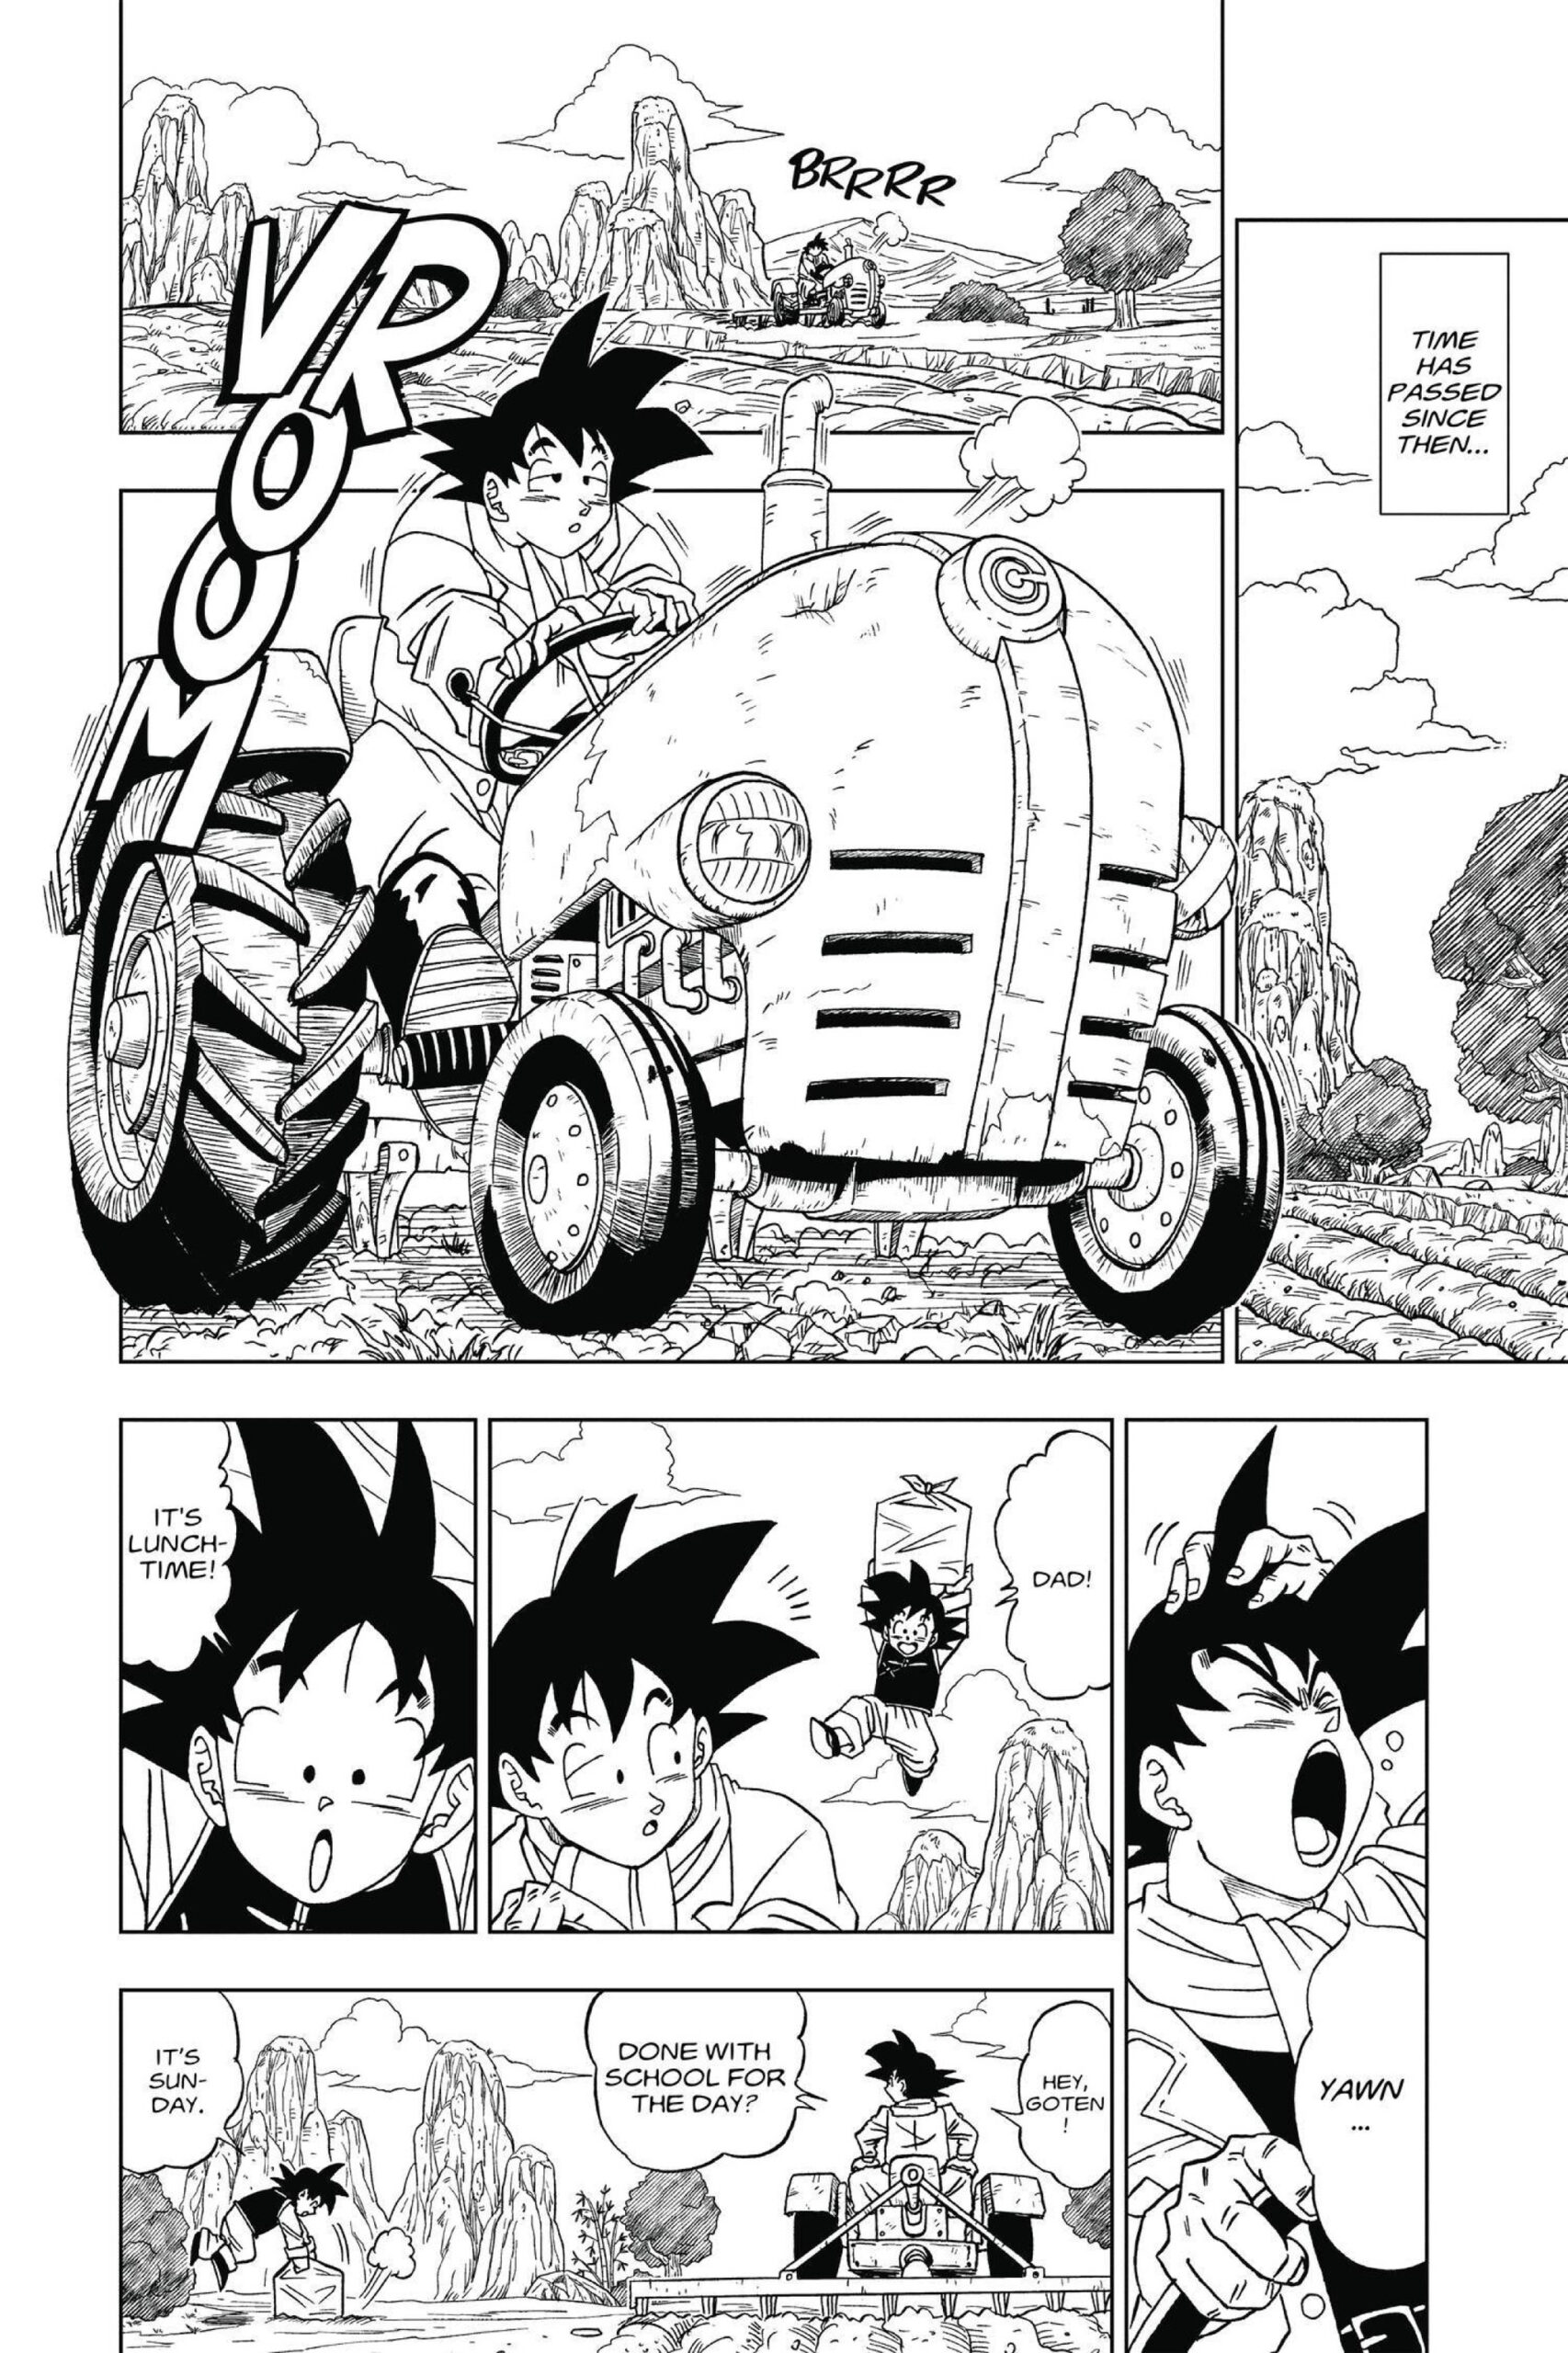 Goku and Goten adapt to life on the farm in Dragon Ball Super Ch. 1 "God of Destruction's Premonition" (2015), Shueisha